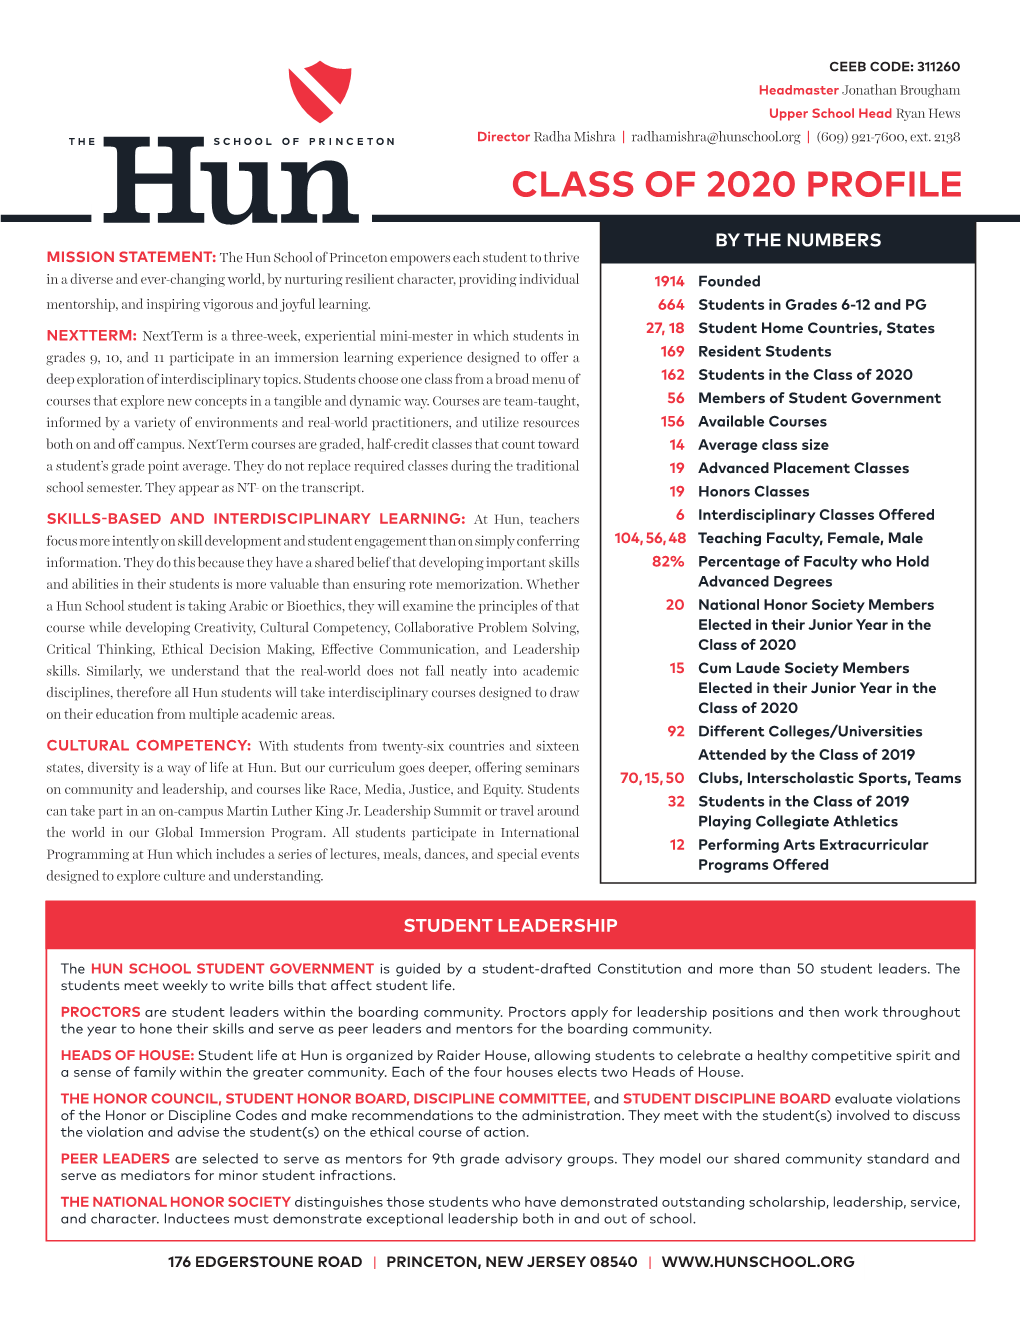 Class of 2020 Profile